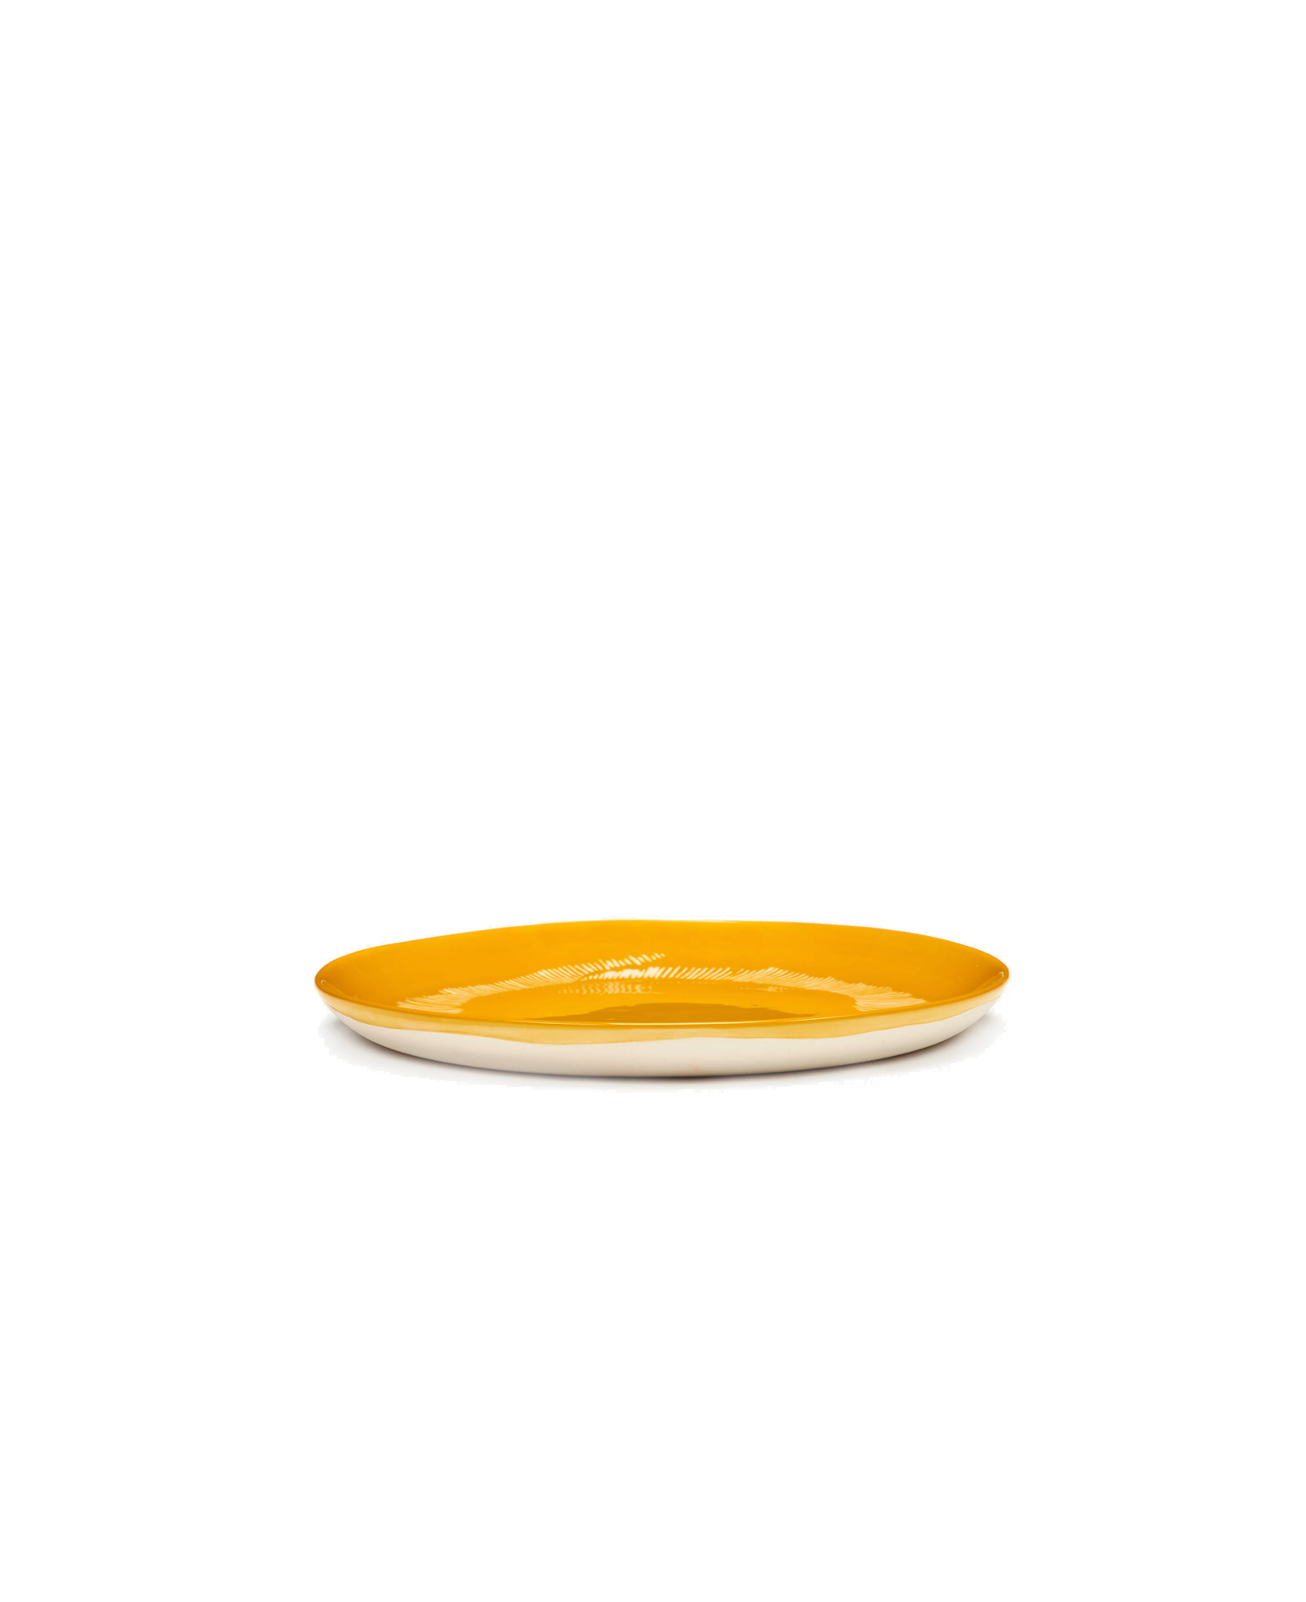 Feast Tableware Starter plate yellow/white stripes - SERAX